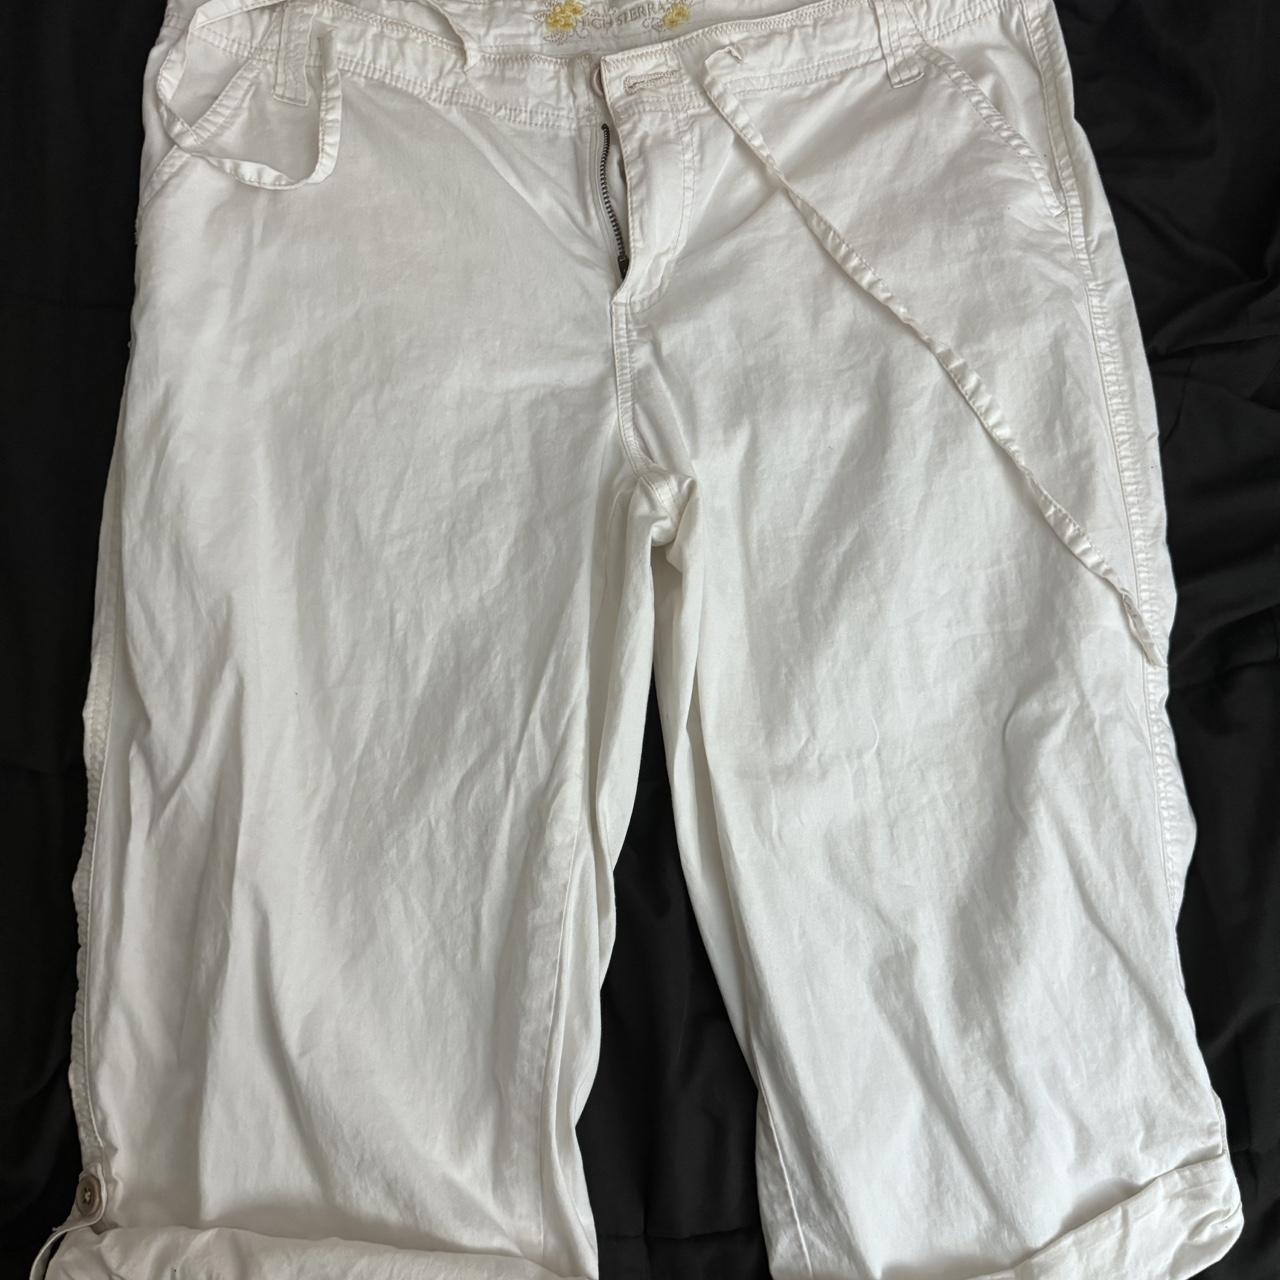 High Sierra Women's White and Cream Shorts (4)